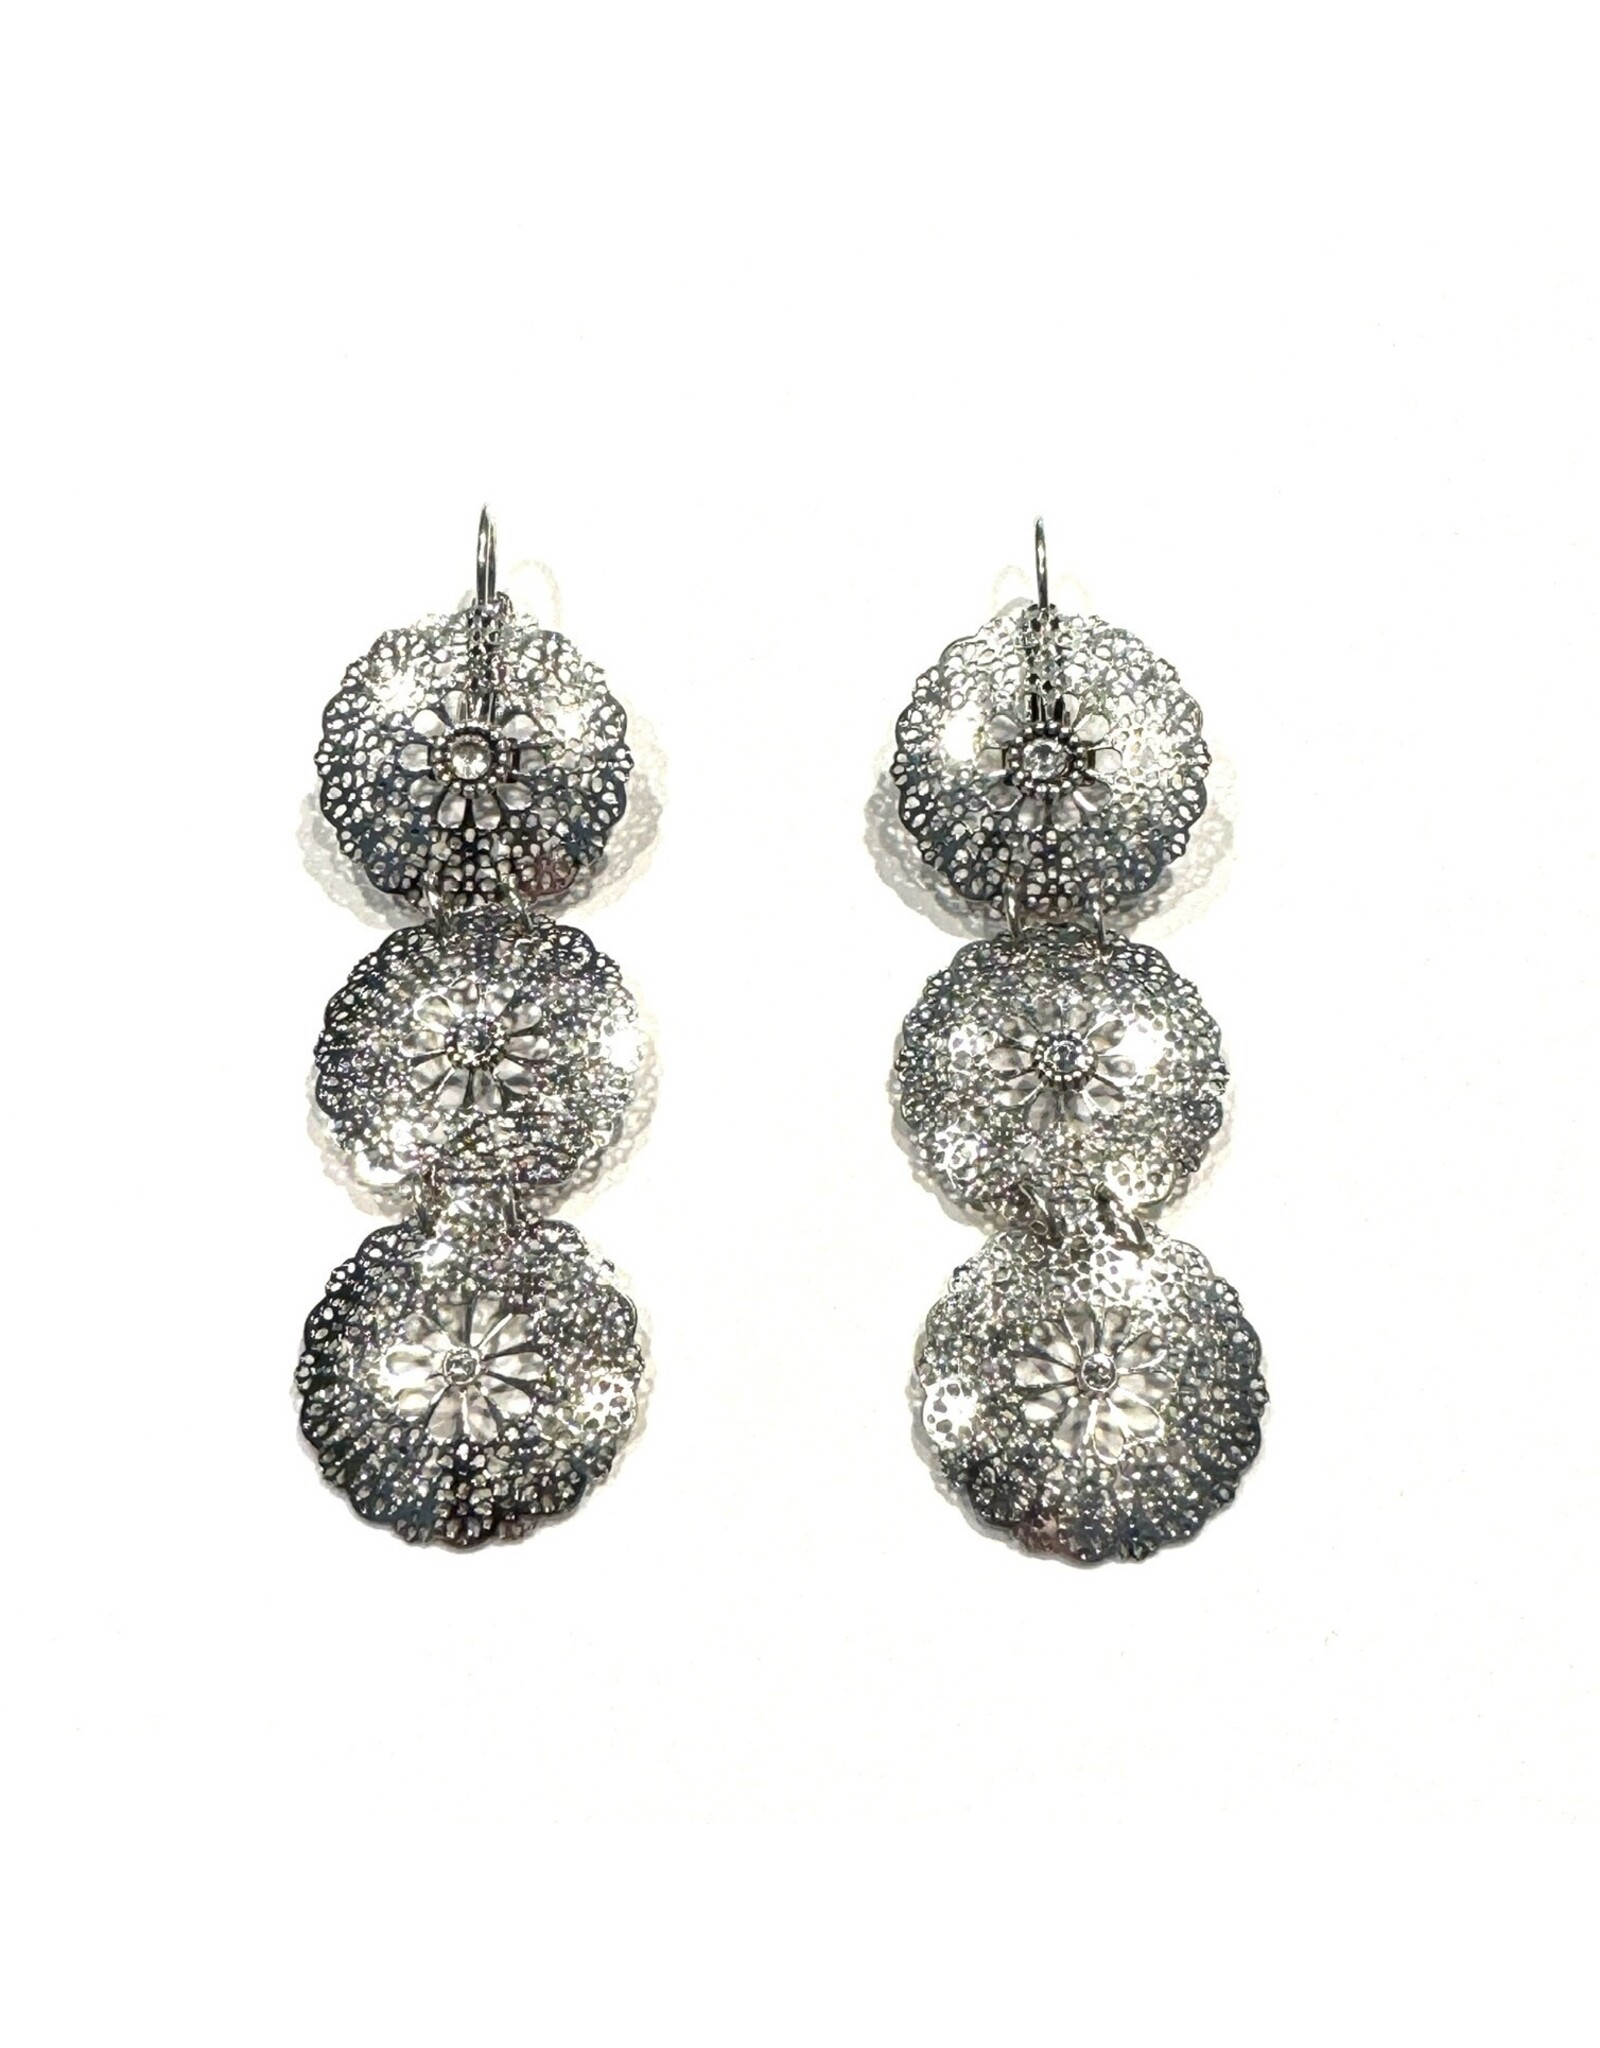 GAS Bijoux Earrings - Flocon trio silver plated